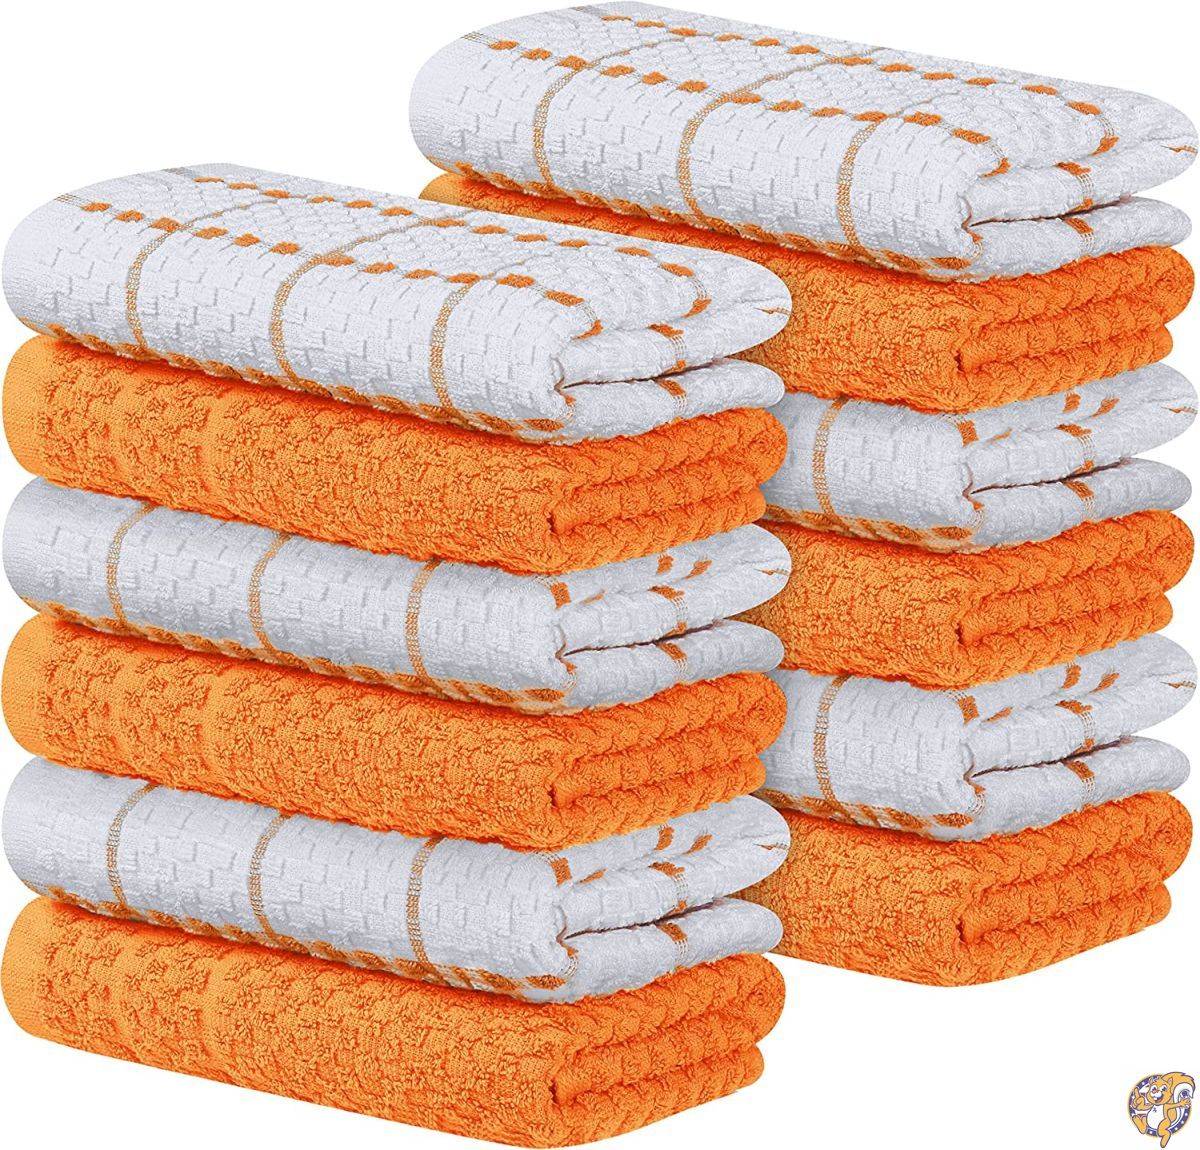 Utopia Towels キッチンタオル 12枚パック 15 x 25インチ 100%リングスパンコットン スーパーソフト 吸収性オレンジディッシュタオル